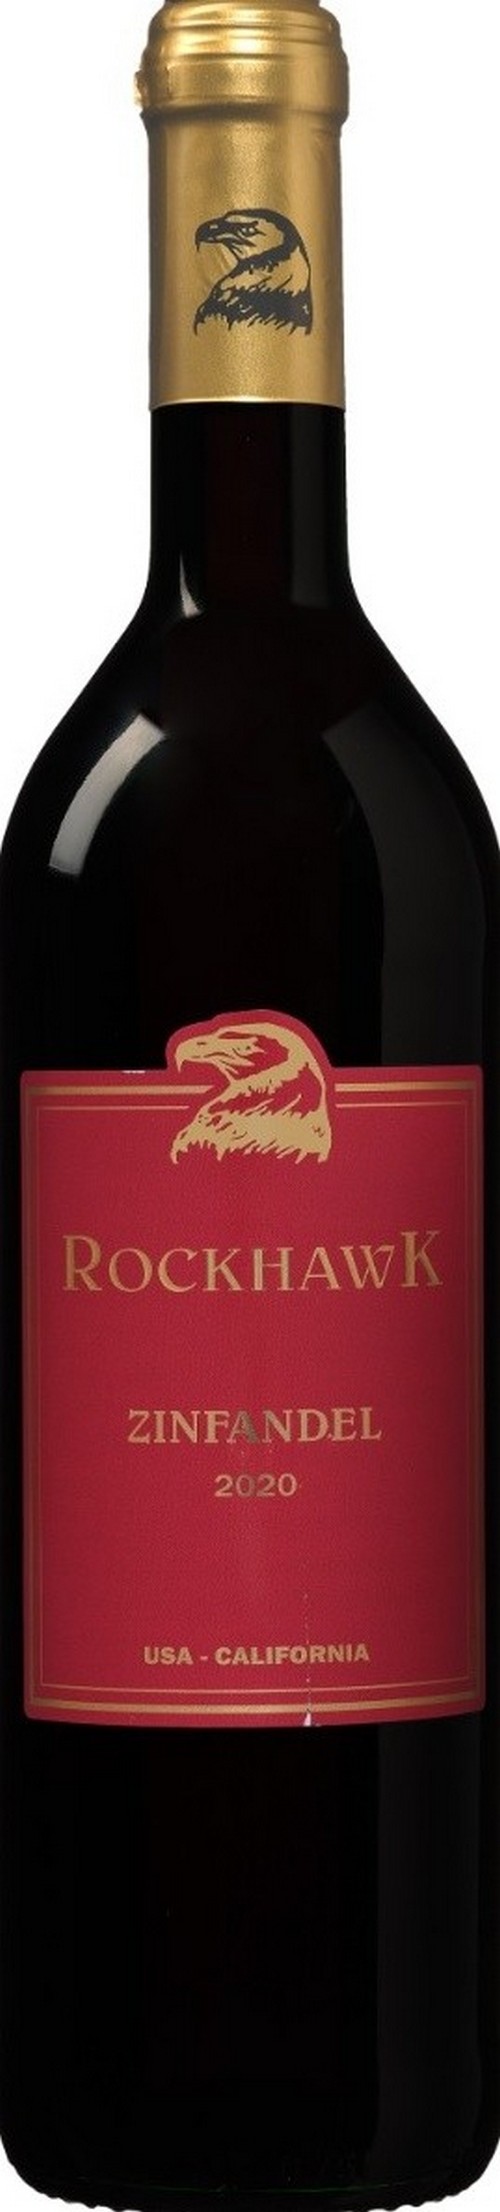 rockhawk-zinfandel-2020